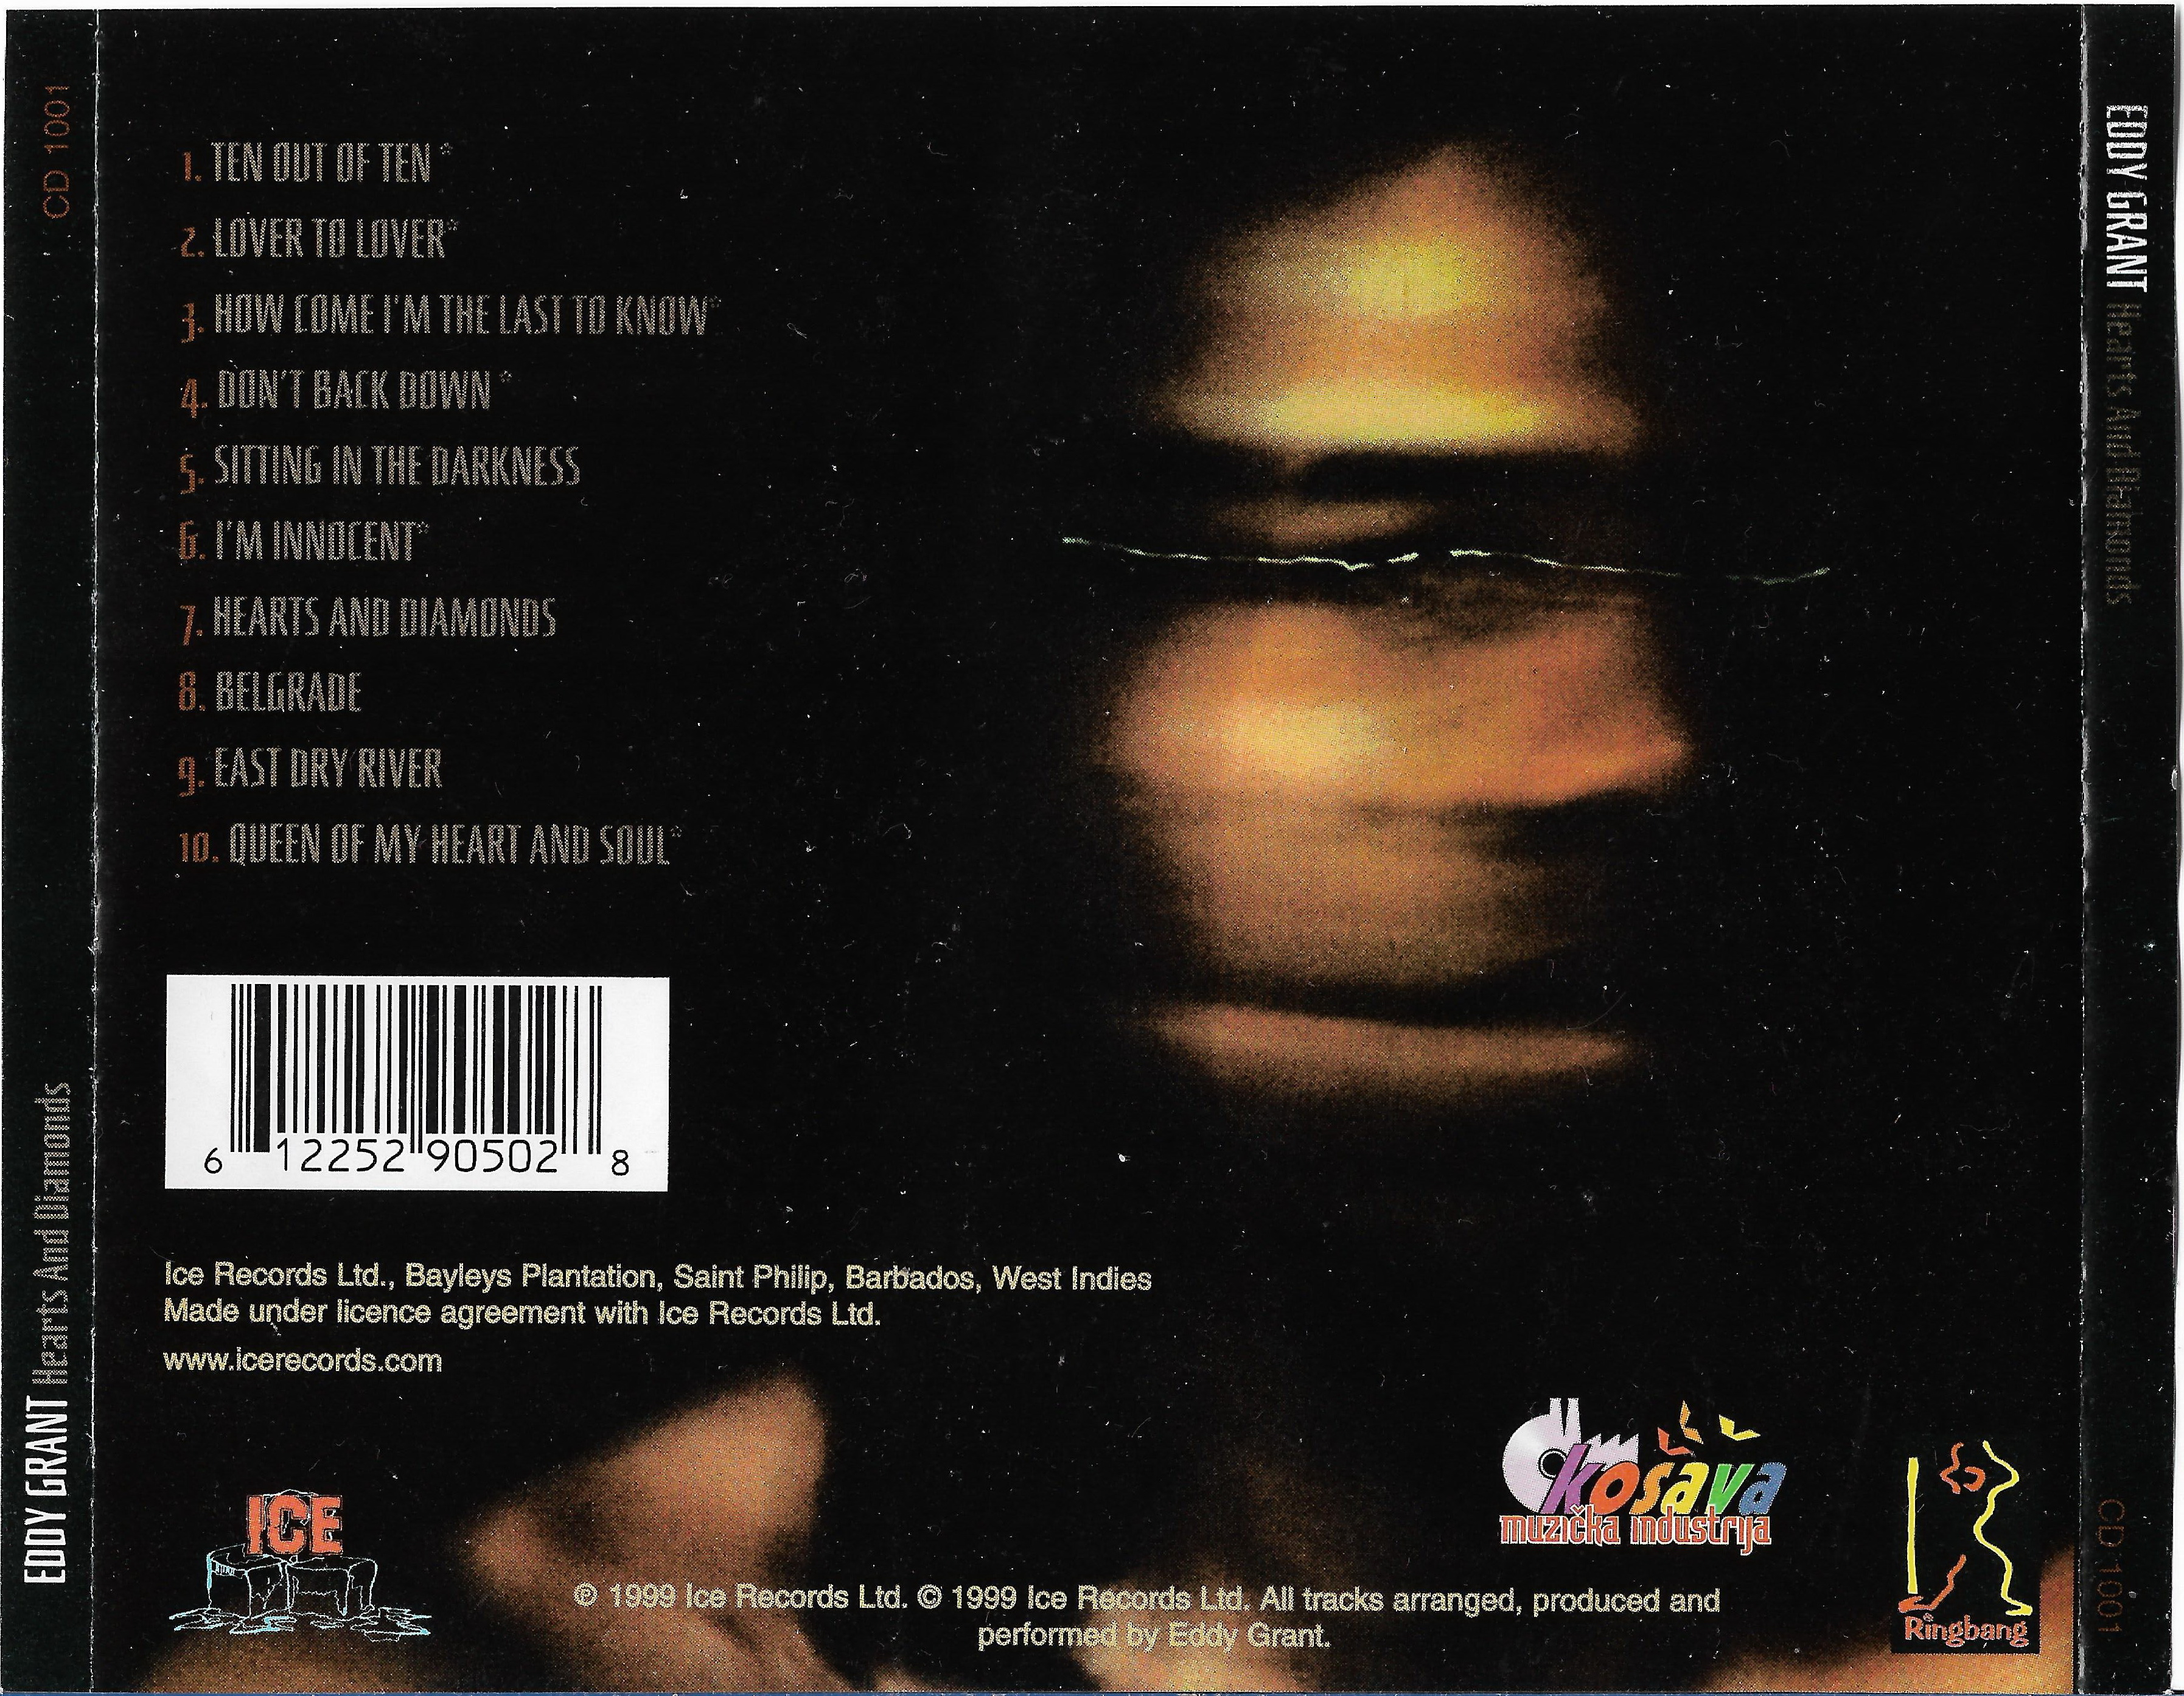 Eddy Grant 1999 CD 10